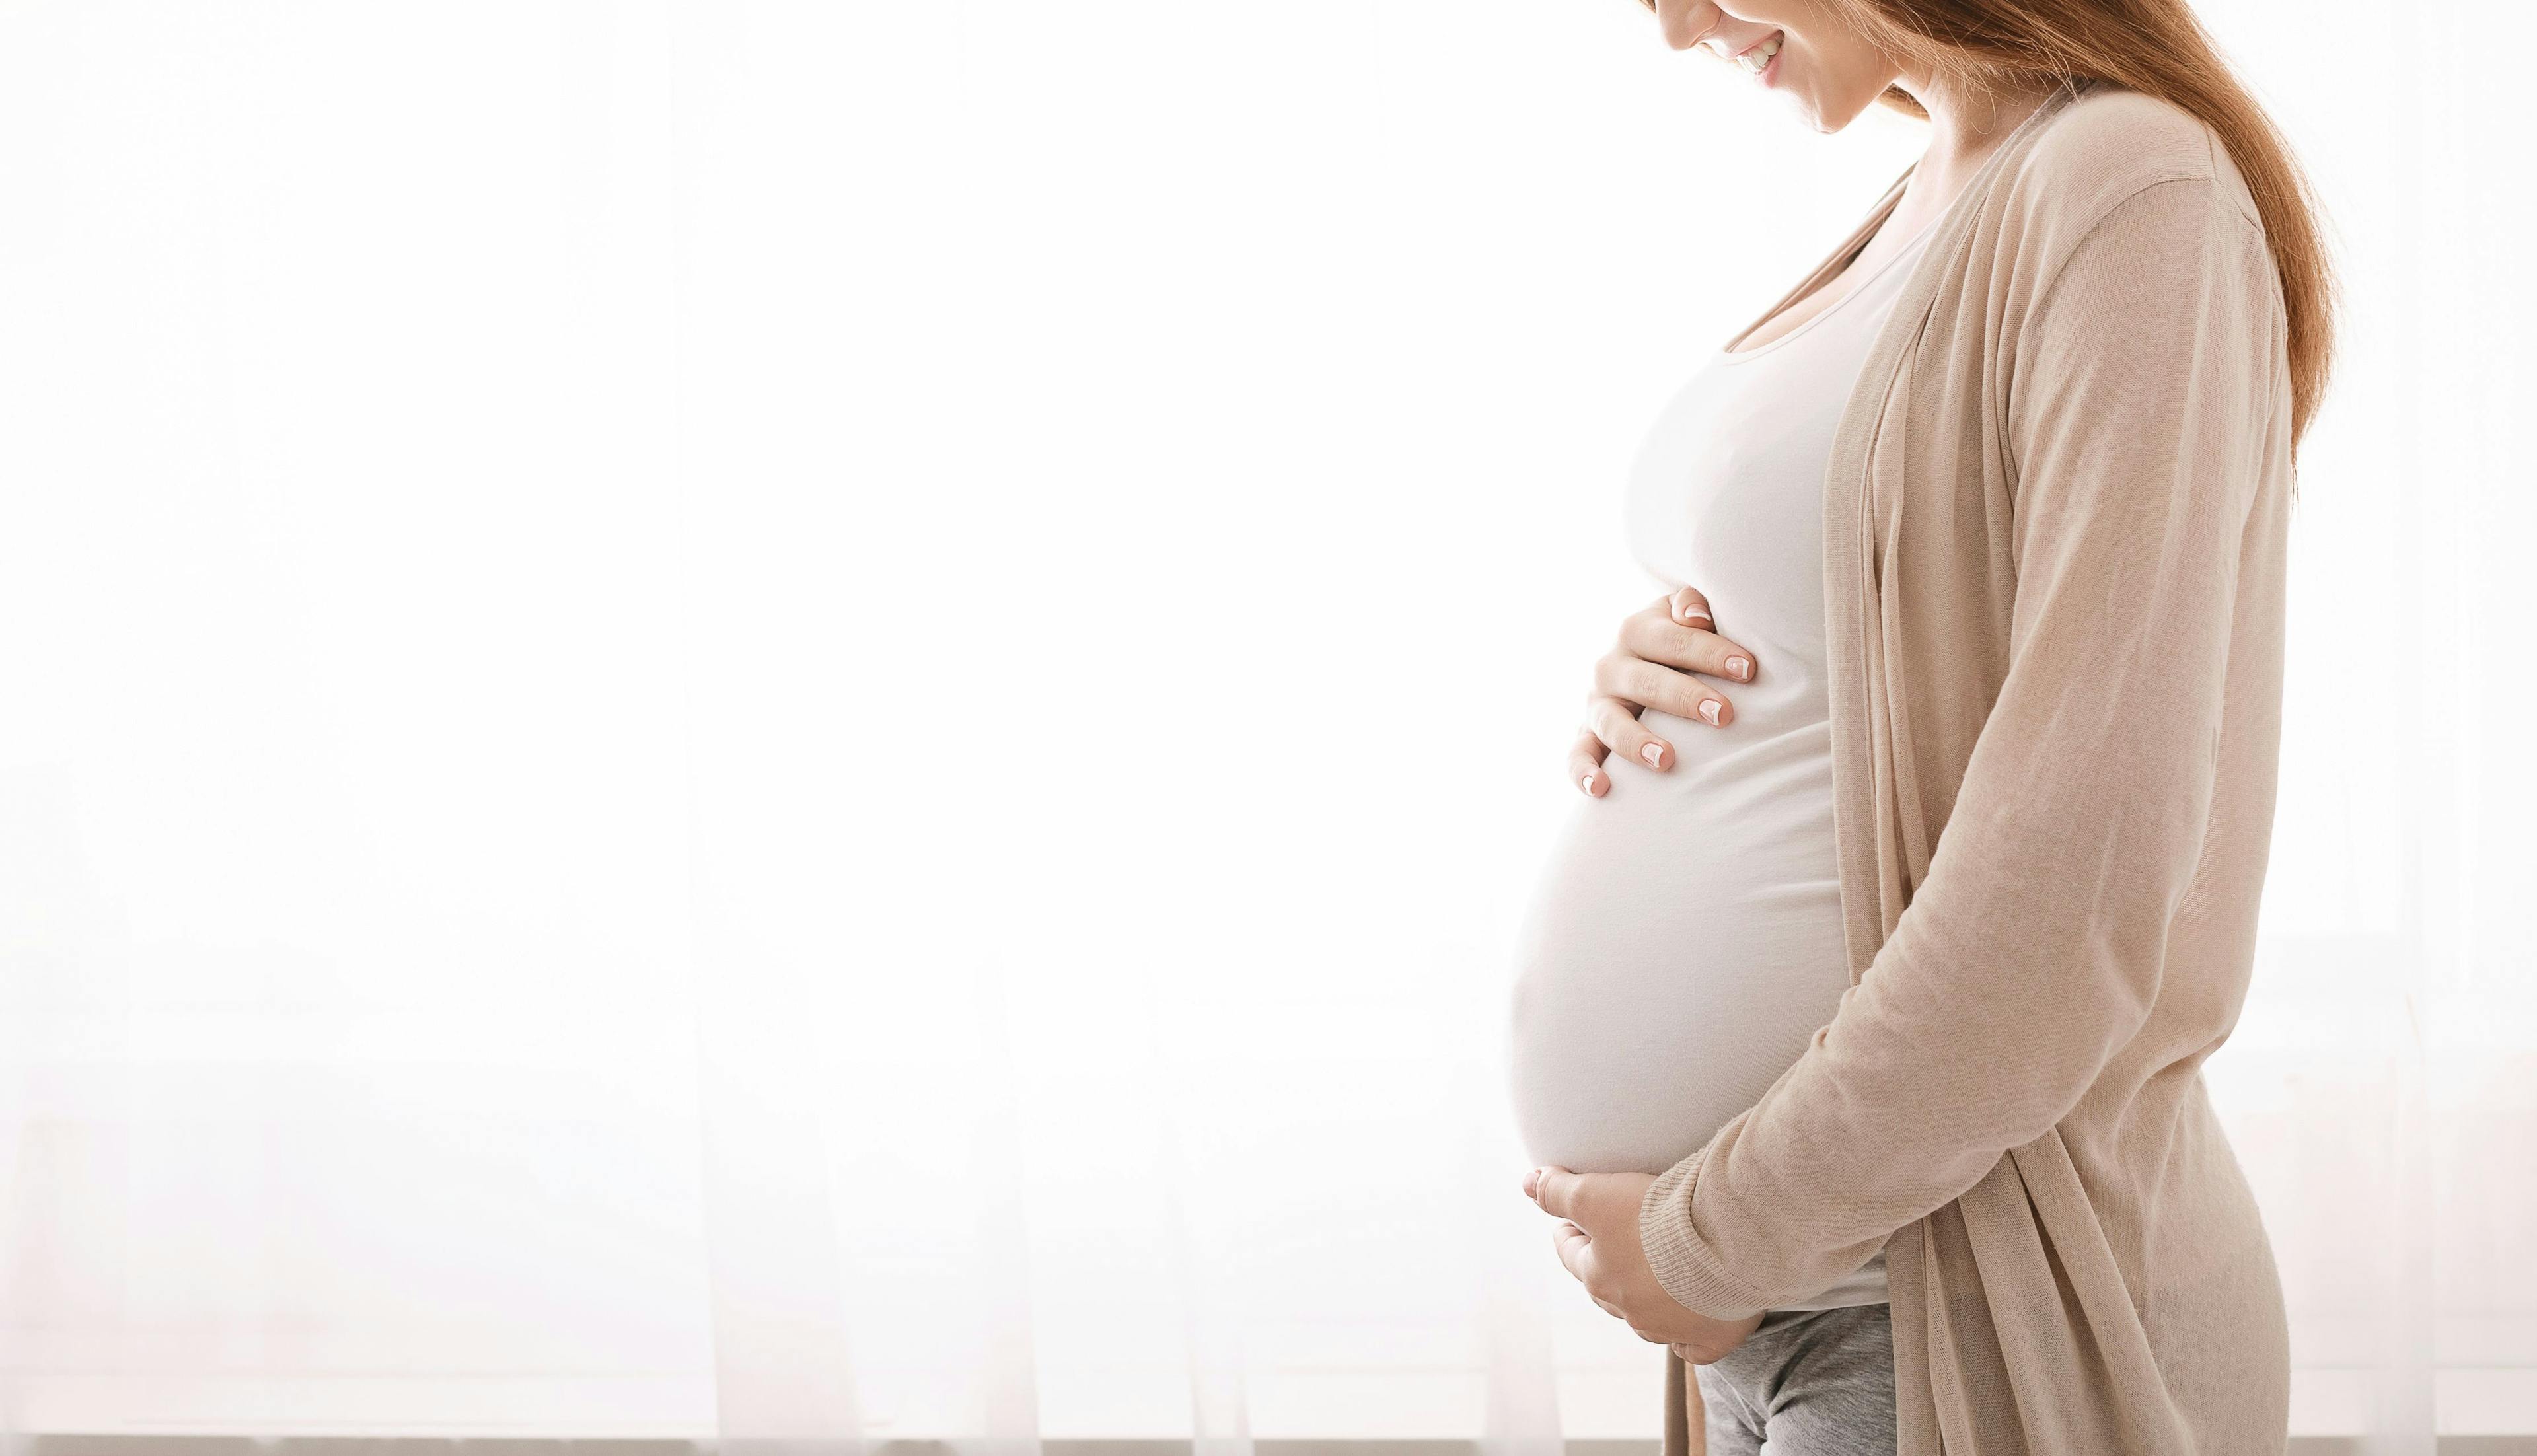 Study Reveals High Hepatitis C Prevalence in Pregnant Women